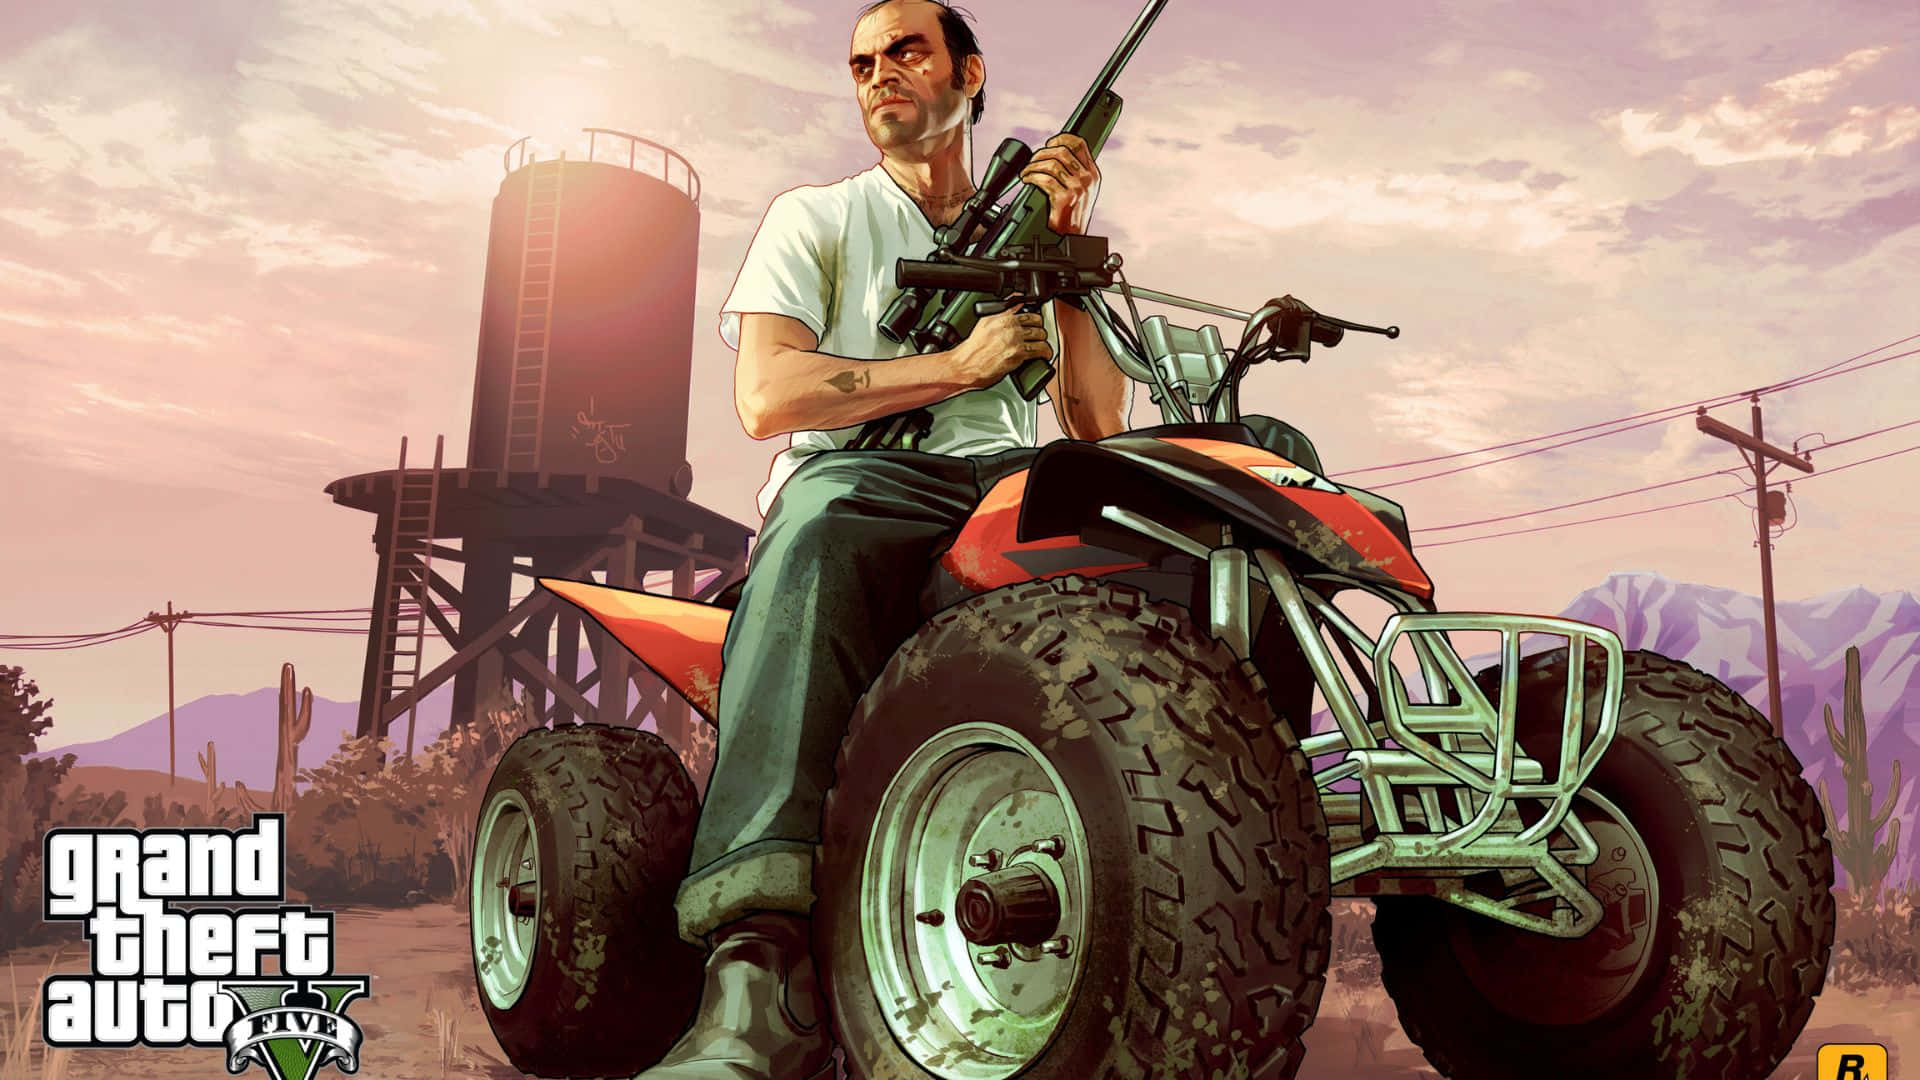 Unforgettable Grand Theft Auto V gaming scene.